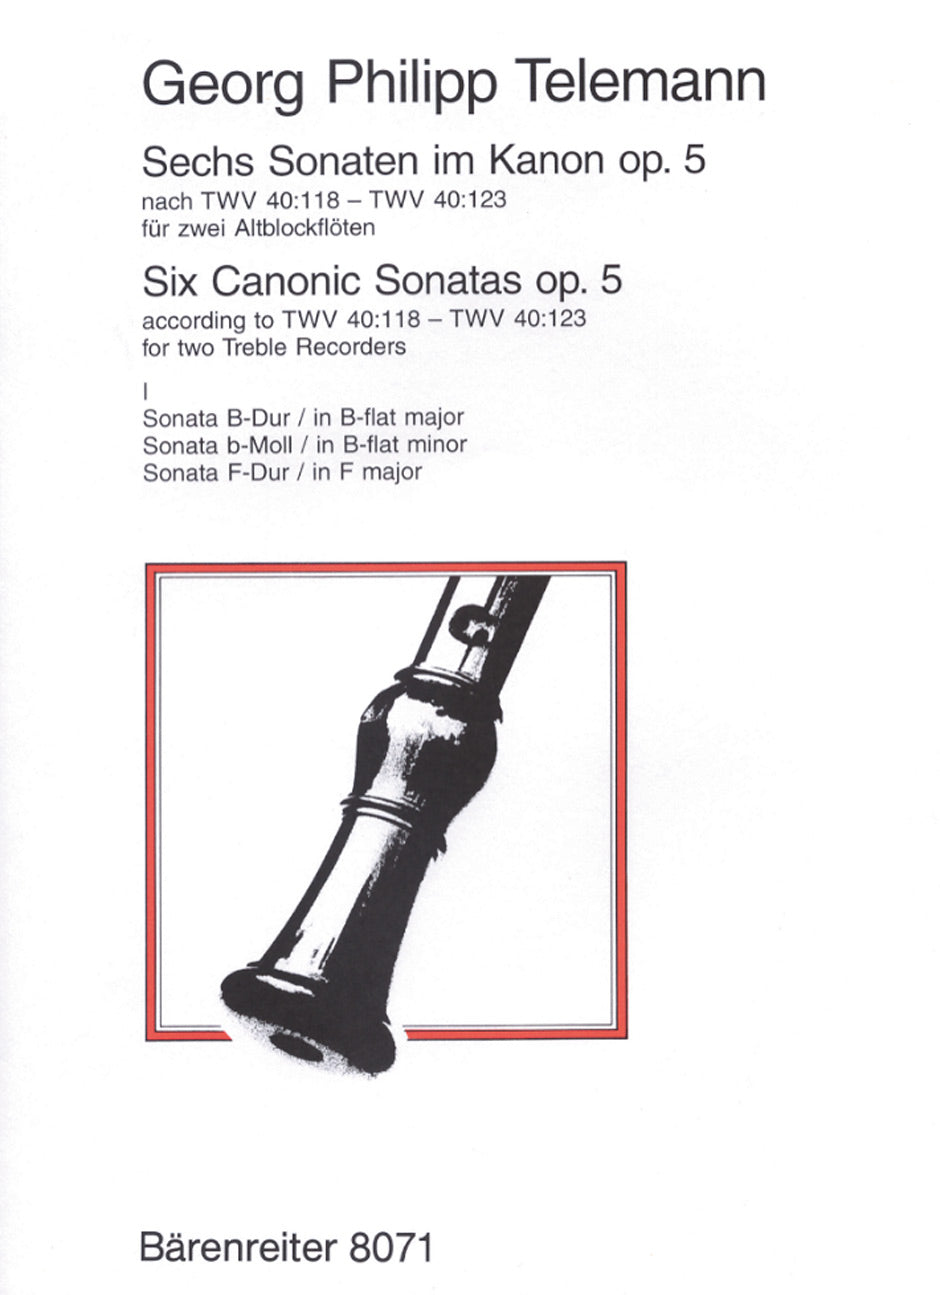 Telemann: Six Sonatas in Canon Op 5 - Book 1, for 2 Treble Recorders